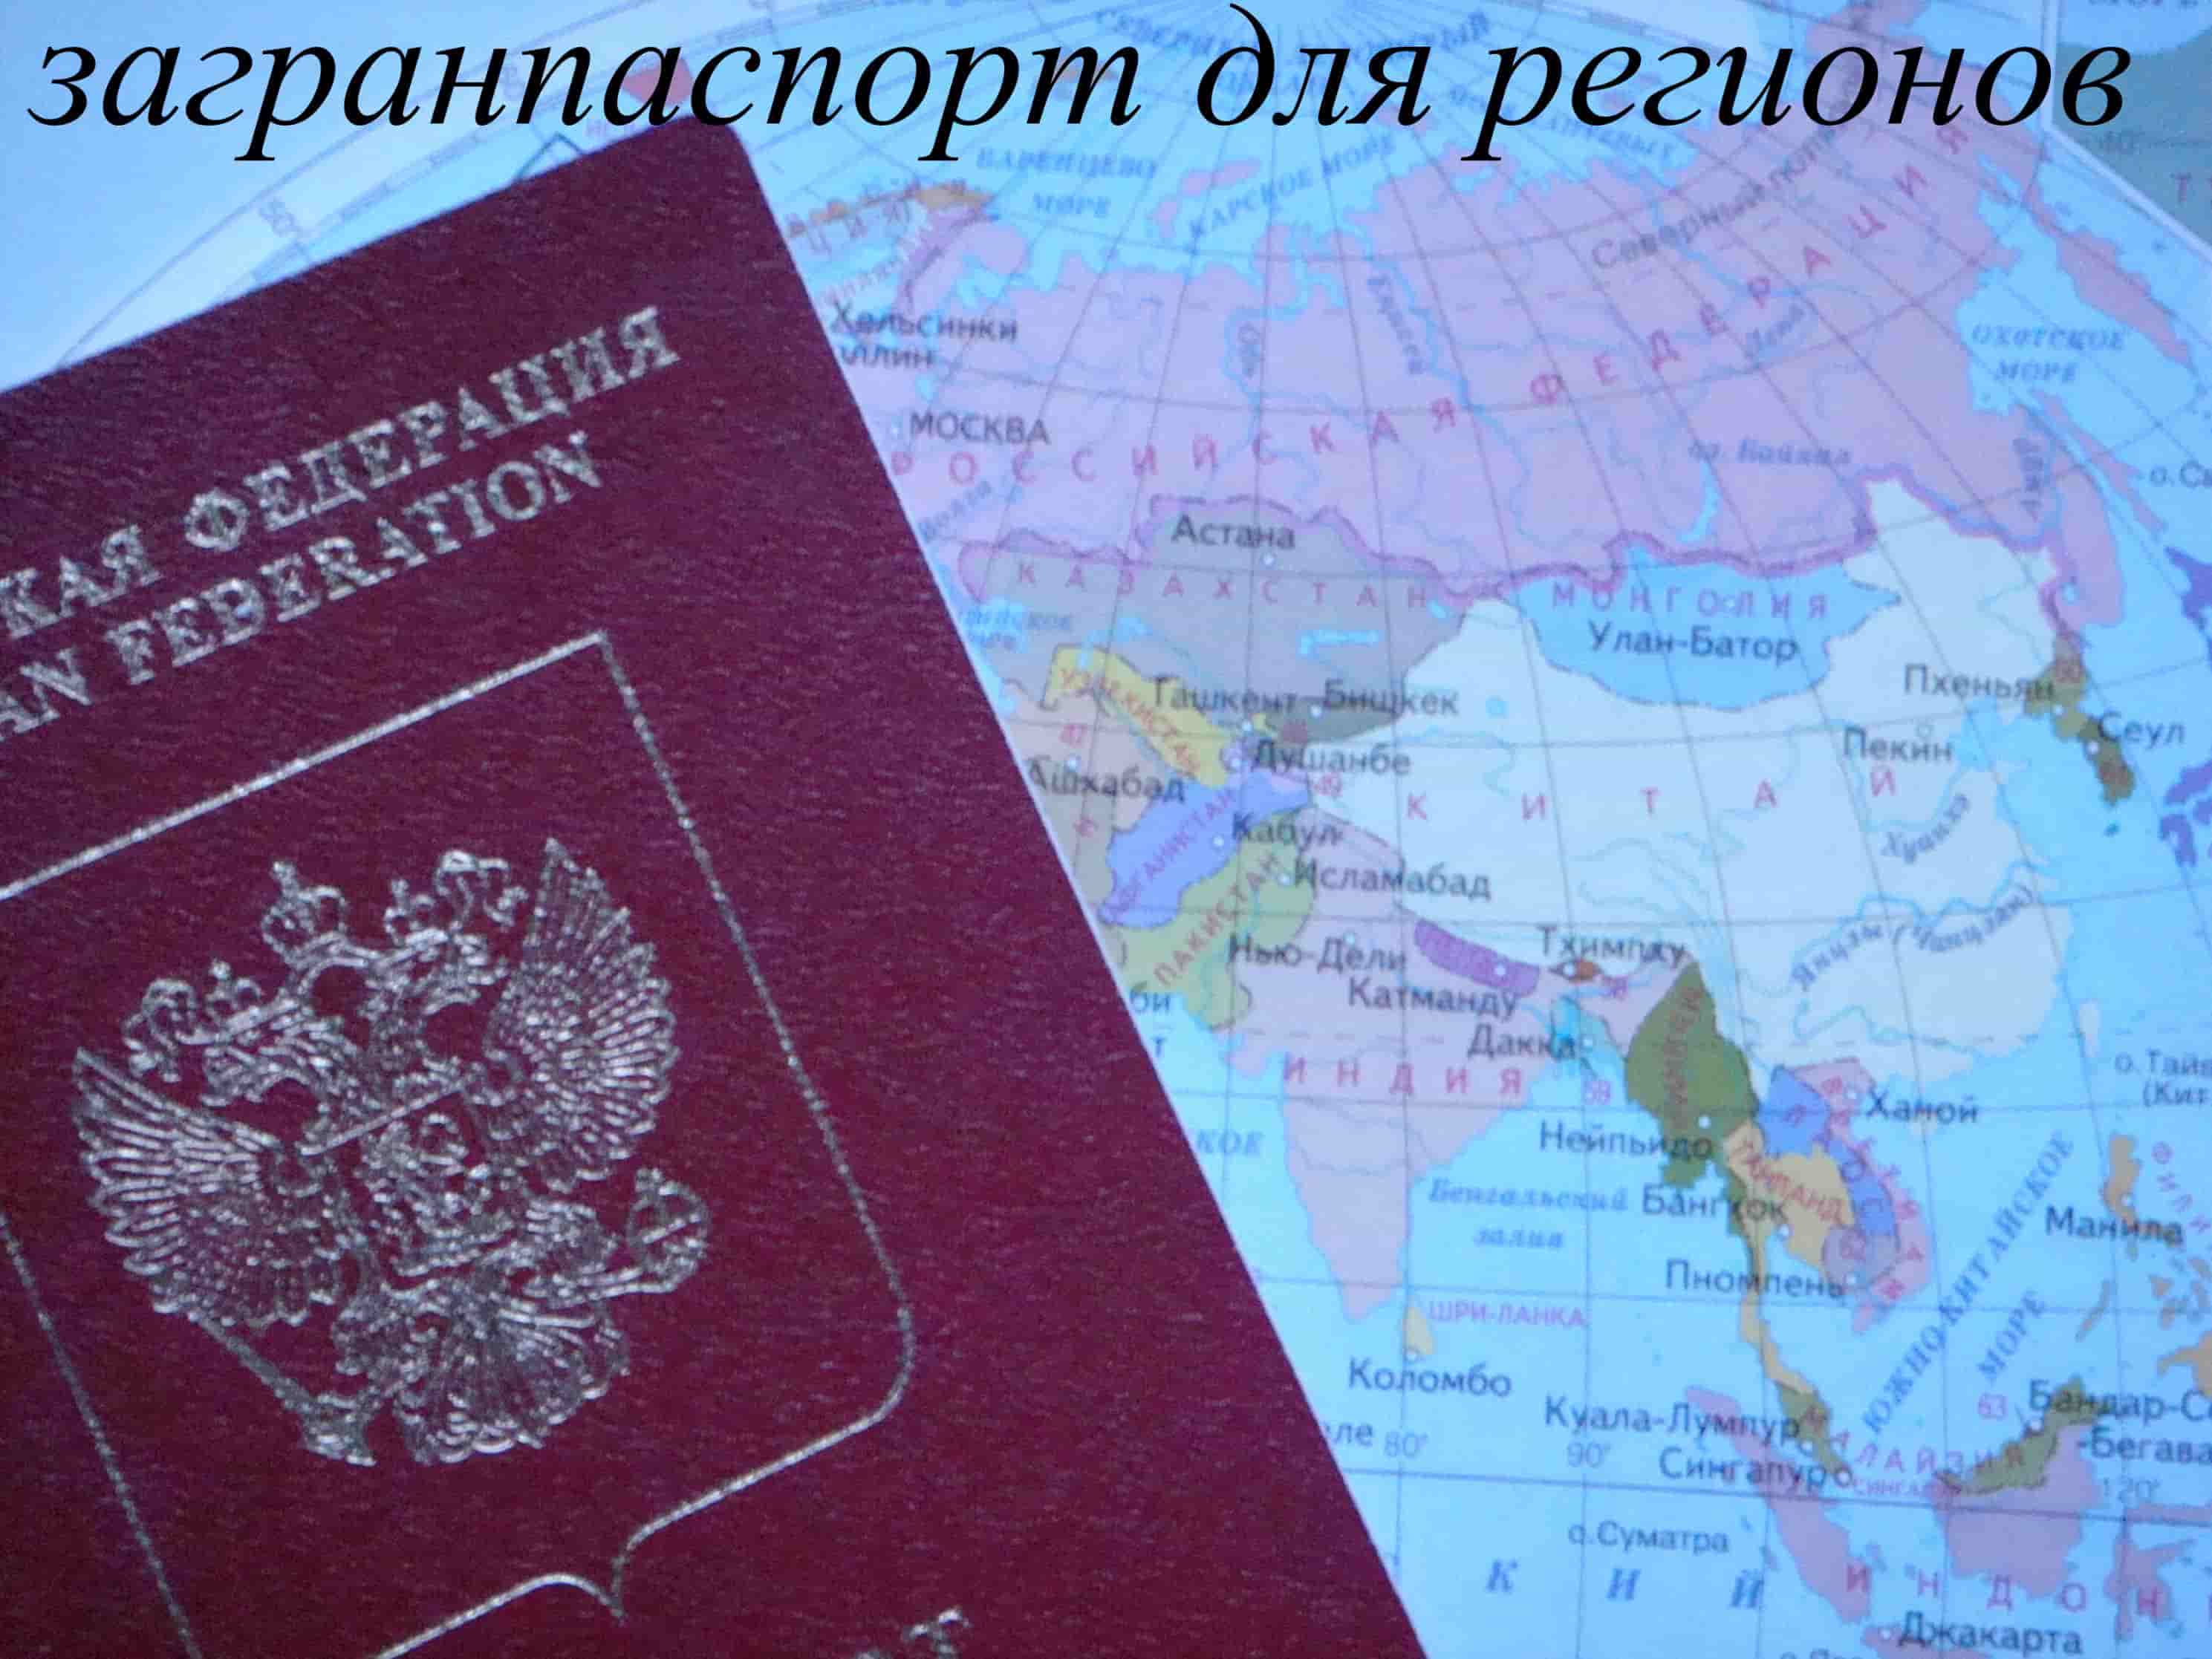 Загранпаспорт для регионов. Оформление загранпаспорта для регионов в Москве.